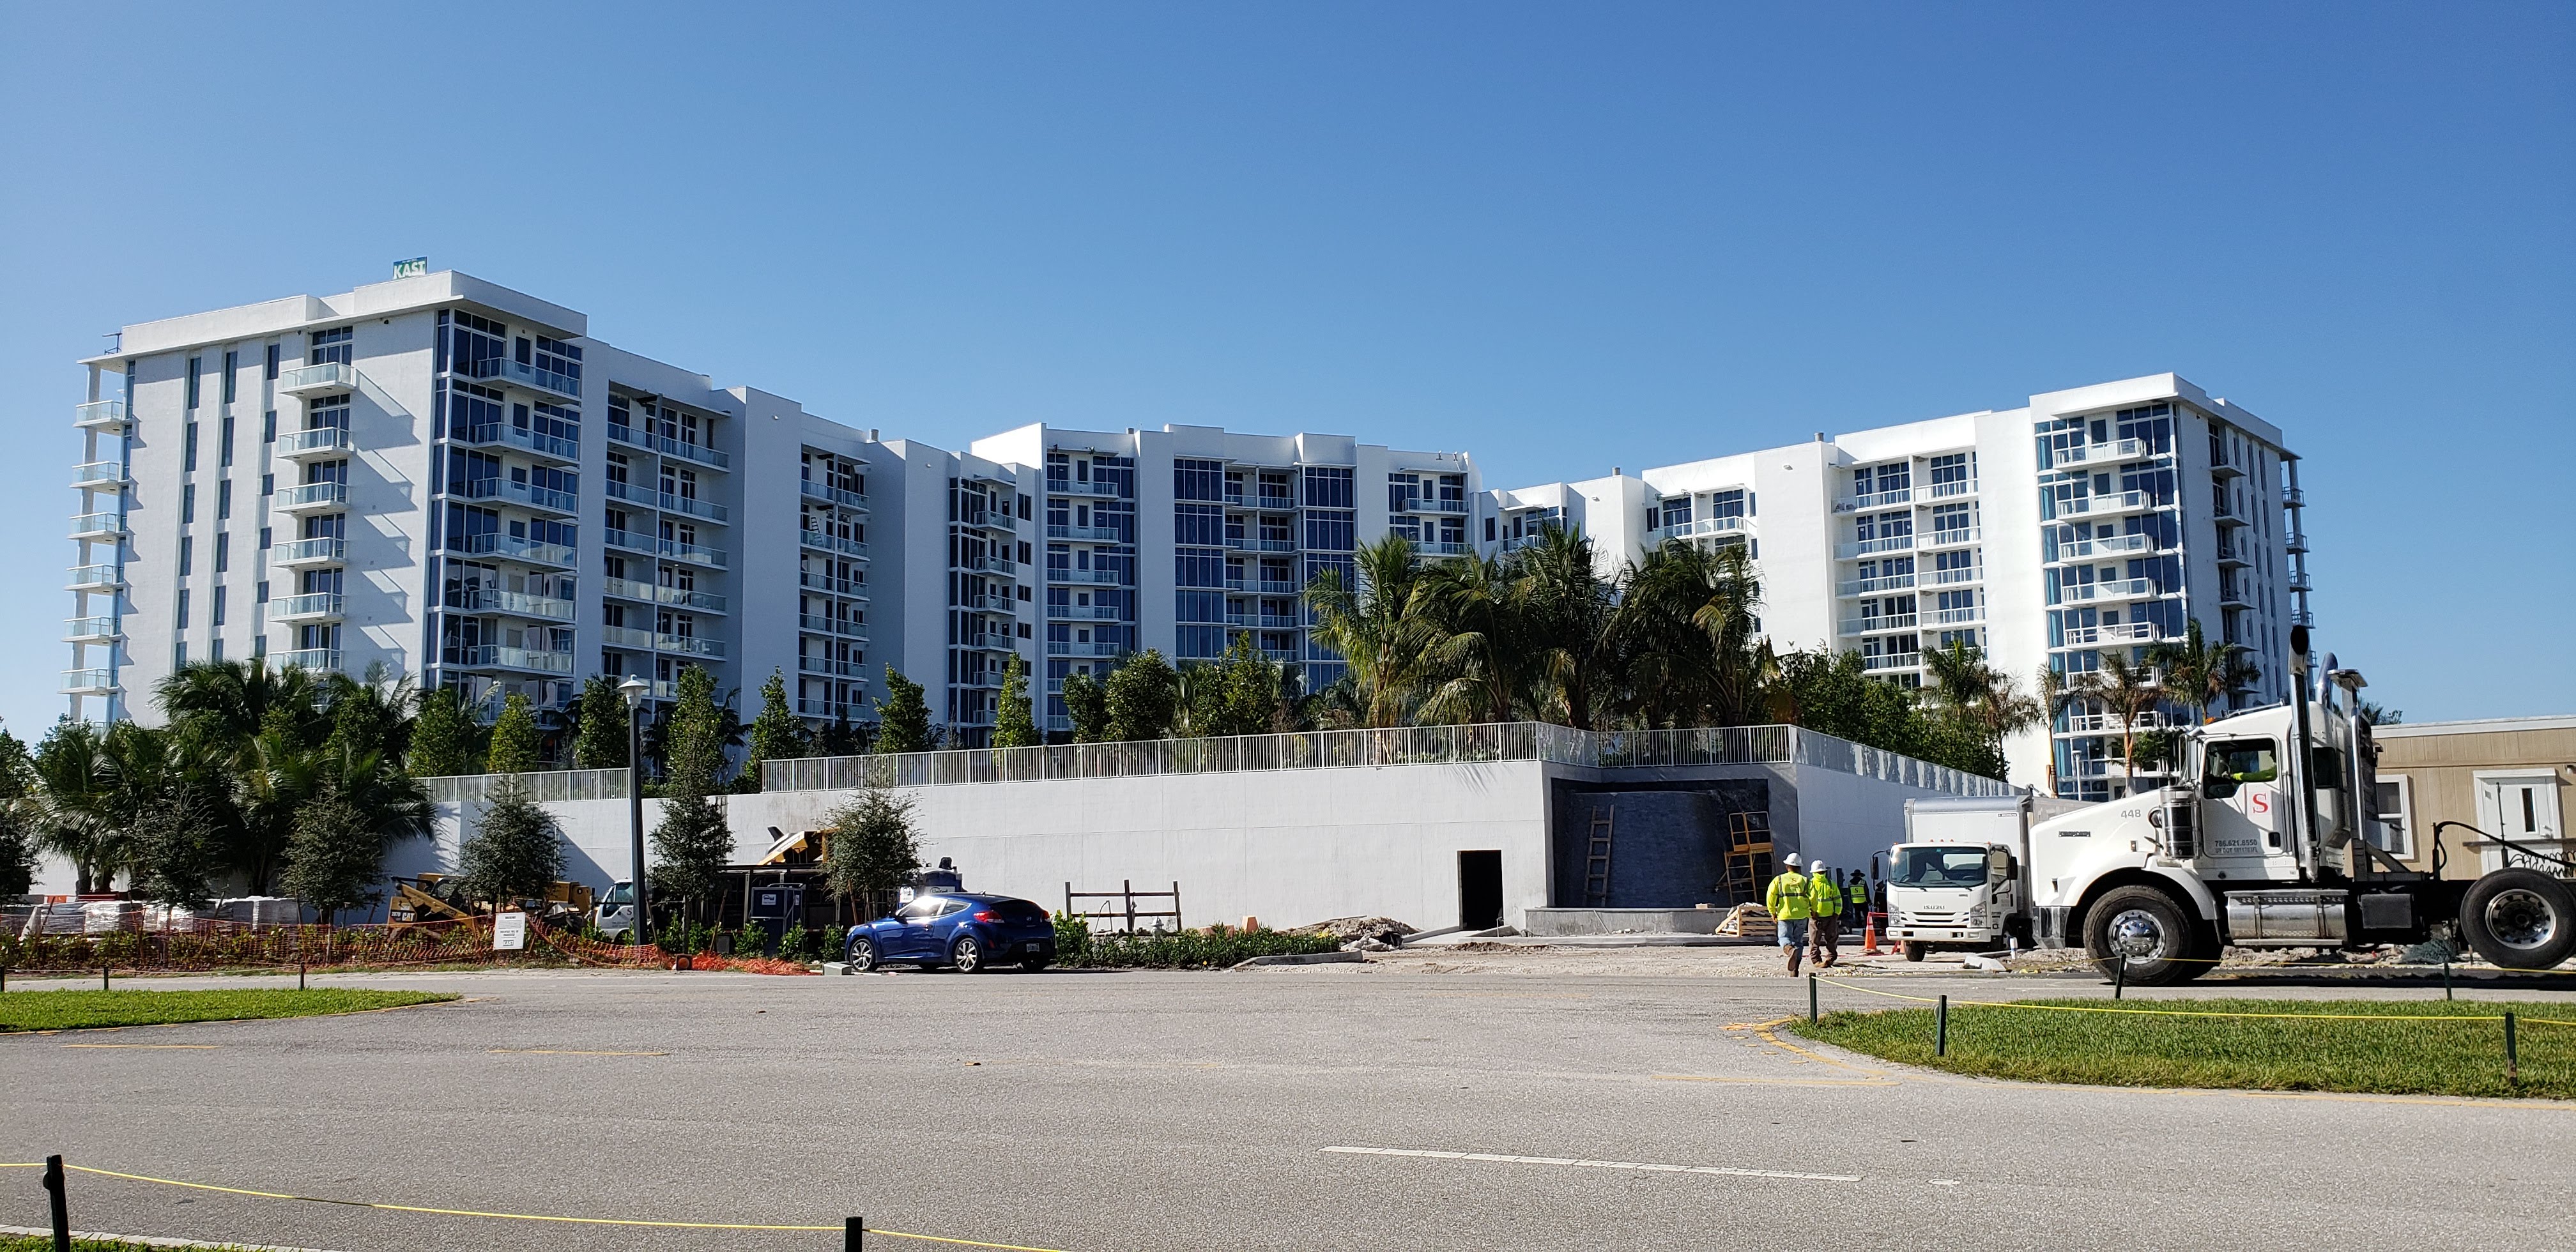 Boca Raton Akoya luxury condo construction in Boca West for Jean-Luc Andriot blog 122618